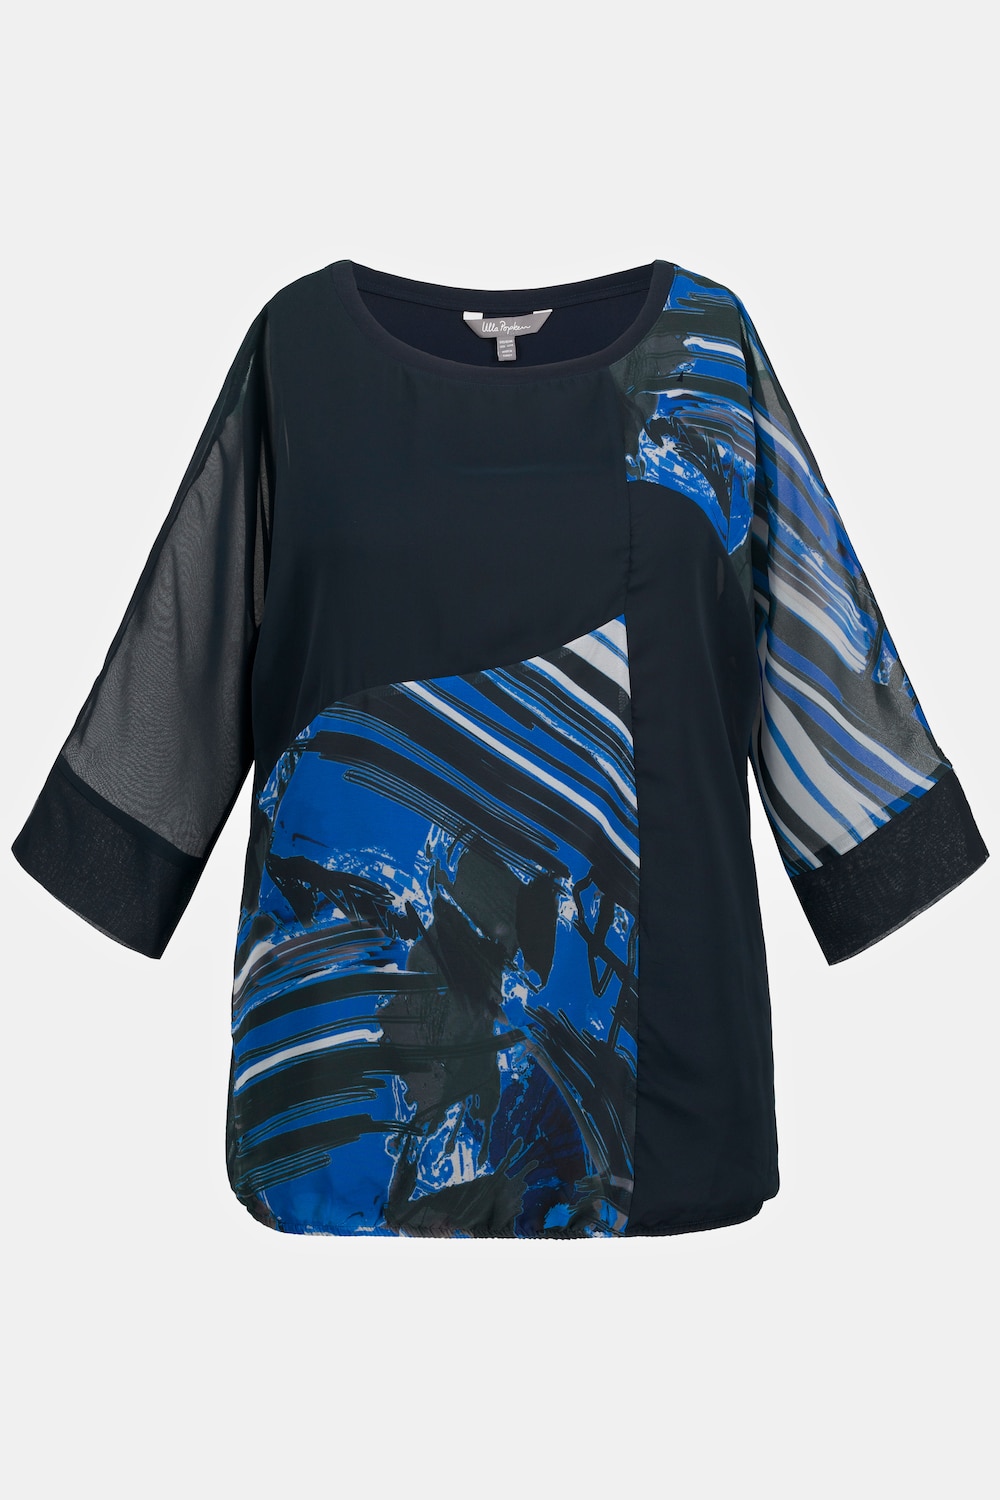 Grote Maten blouse, Dames, blauw, Maat: 62/64, Polyester/Viscose, Ulla Popken